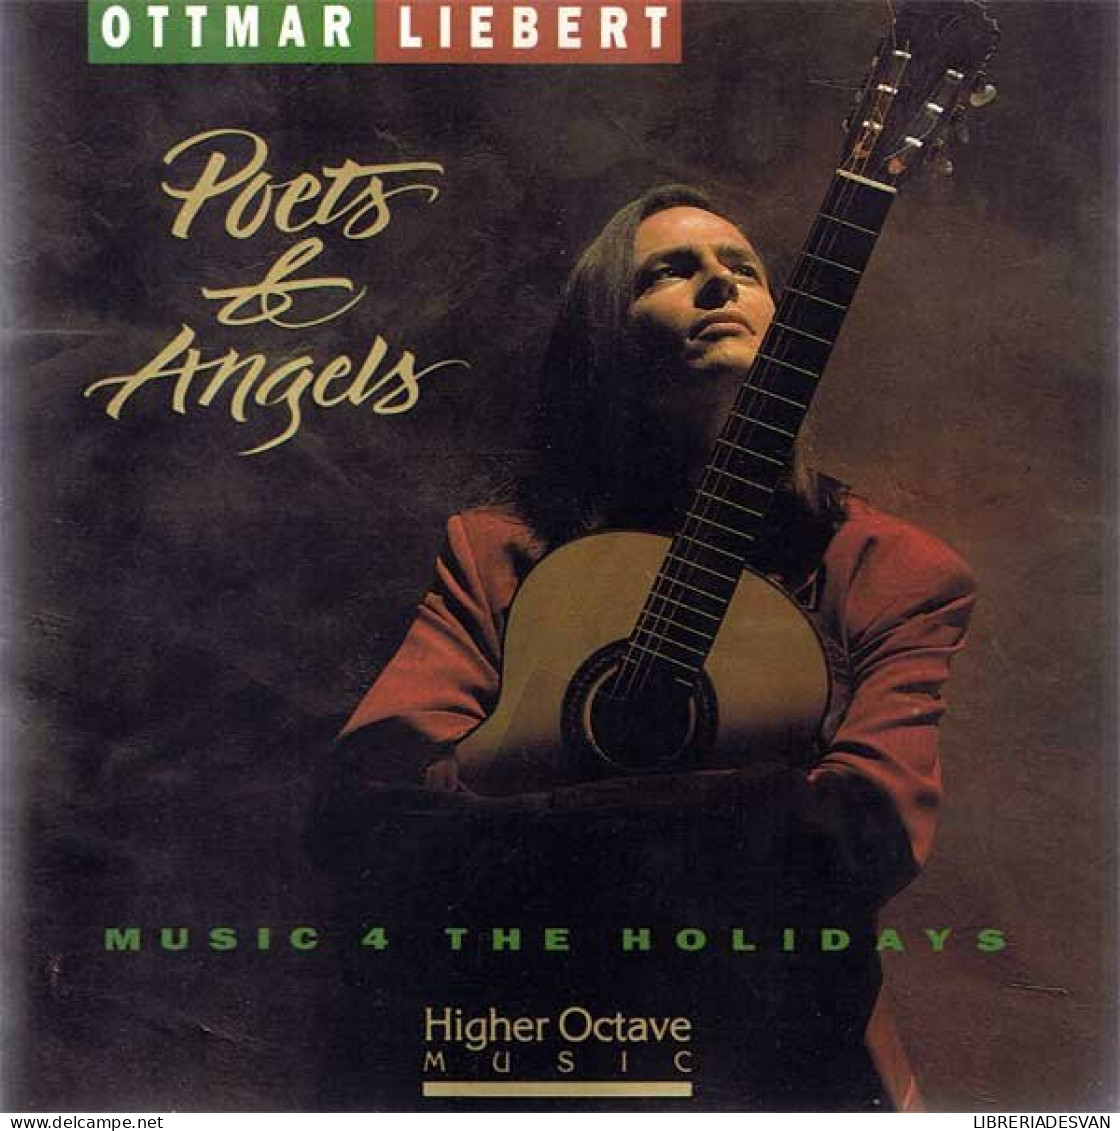 Ottmar Liebert - Poets & Angels. CD - Other - Spanish Music